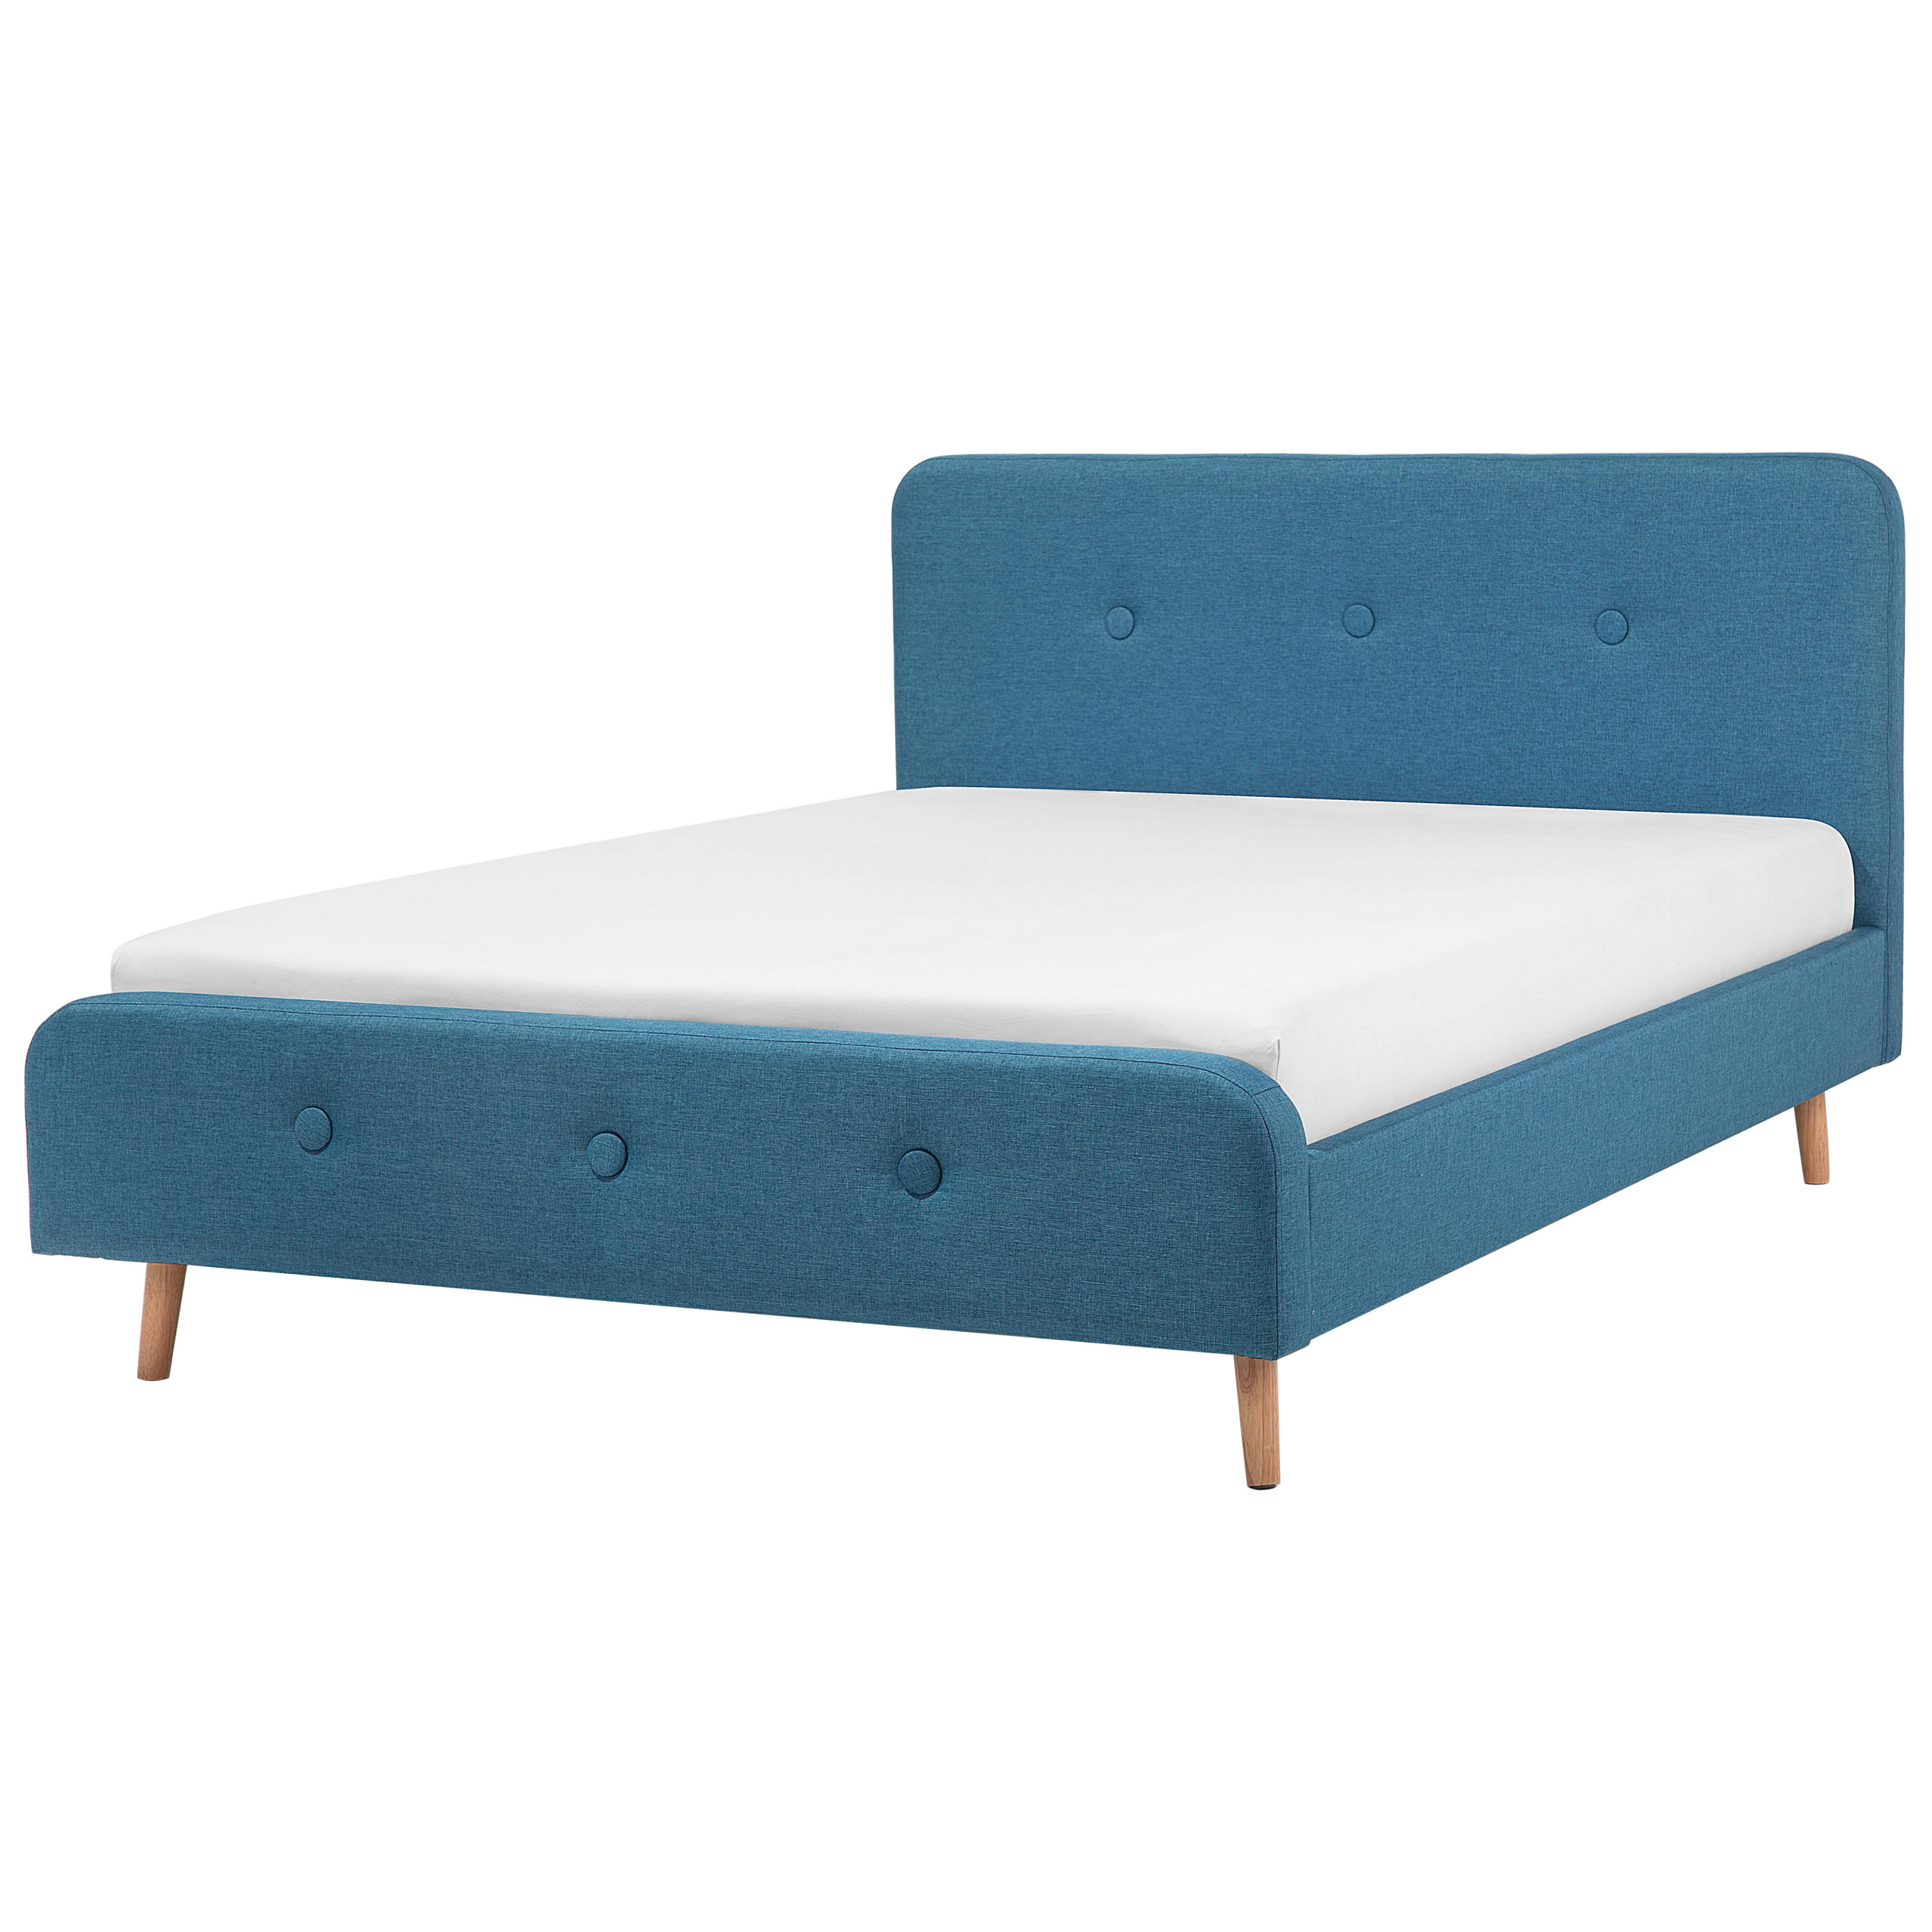 Beliani Slatted Bed Frame Dark Blue Polyester Fabric Upholstered Wooden Legs 6ft EU Super King Size Modern Design